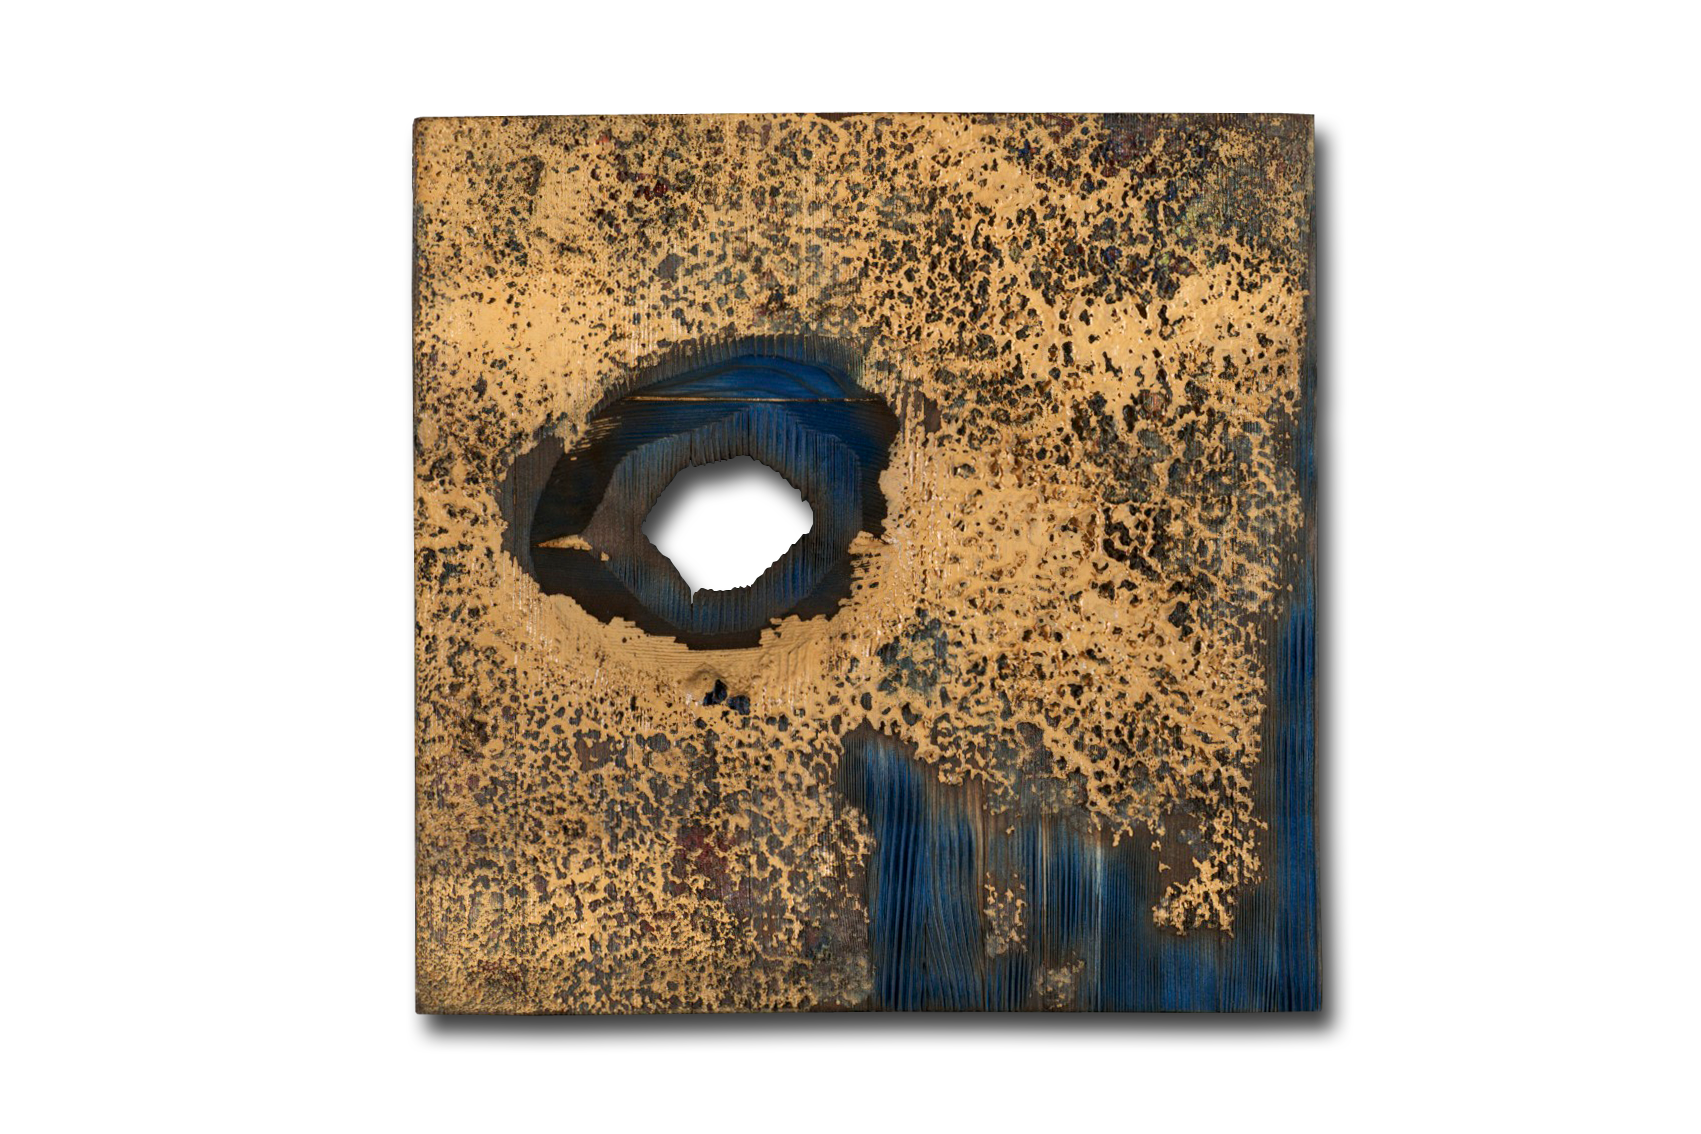 Thomas Girbl "burningdiscovery-9043" 50x50cm 2013